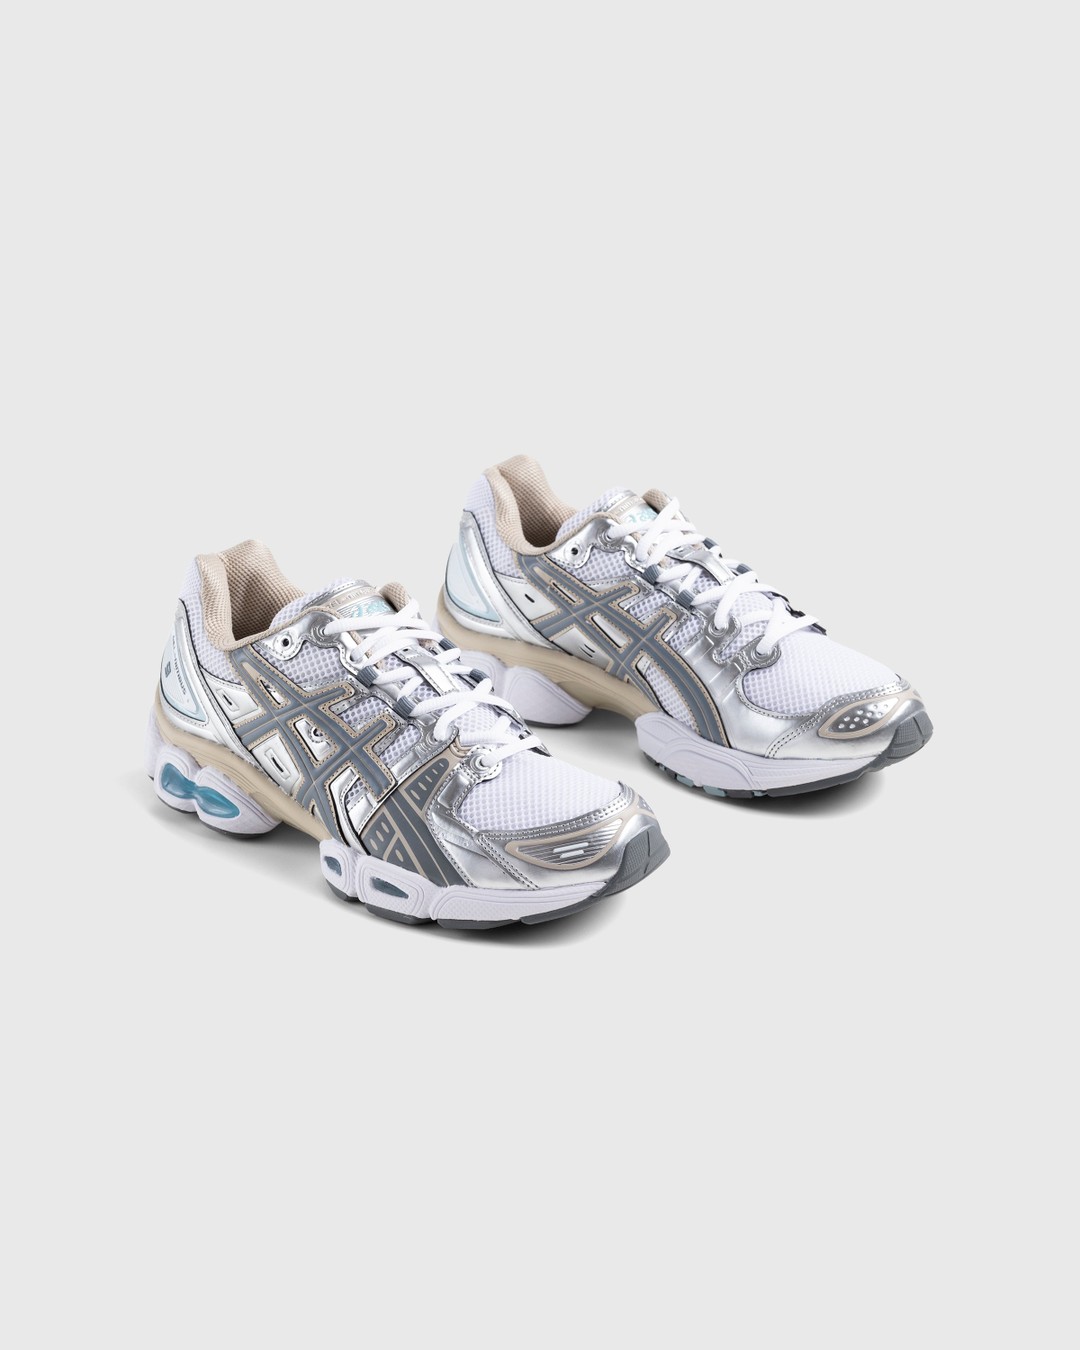 asics – Gel-Nimbus 9 White/Steel Grey - Low Top Sneakers - White - Image 3